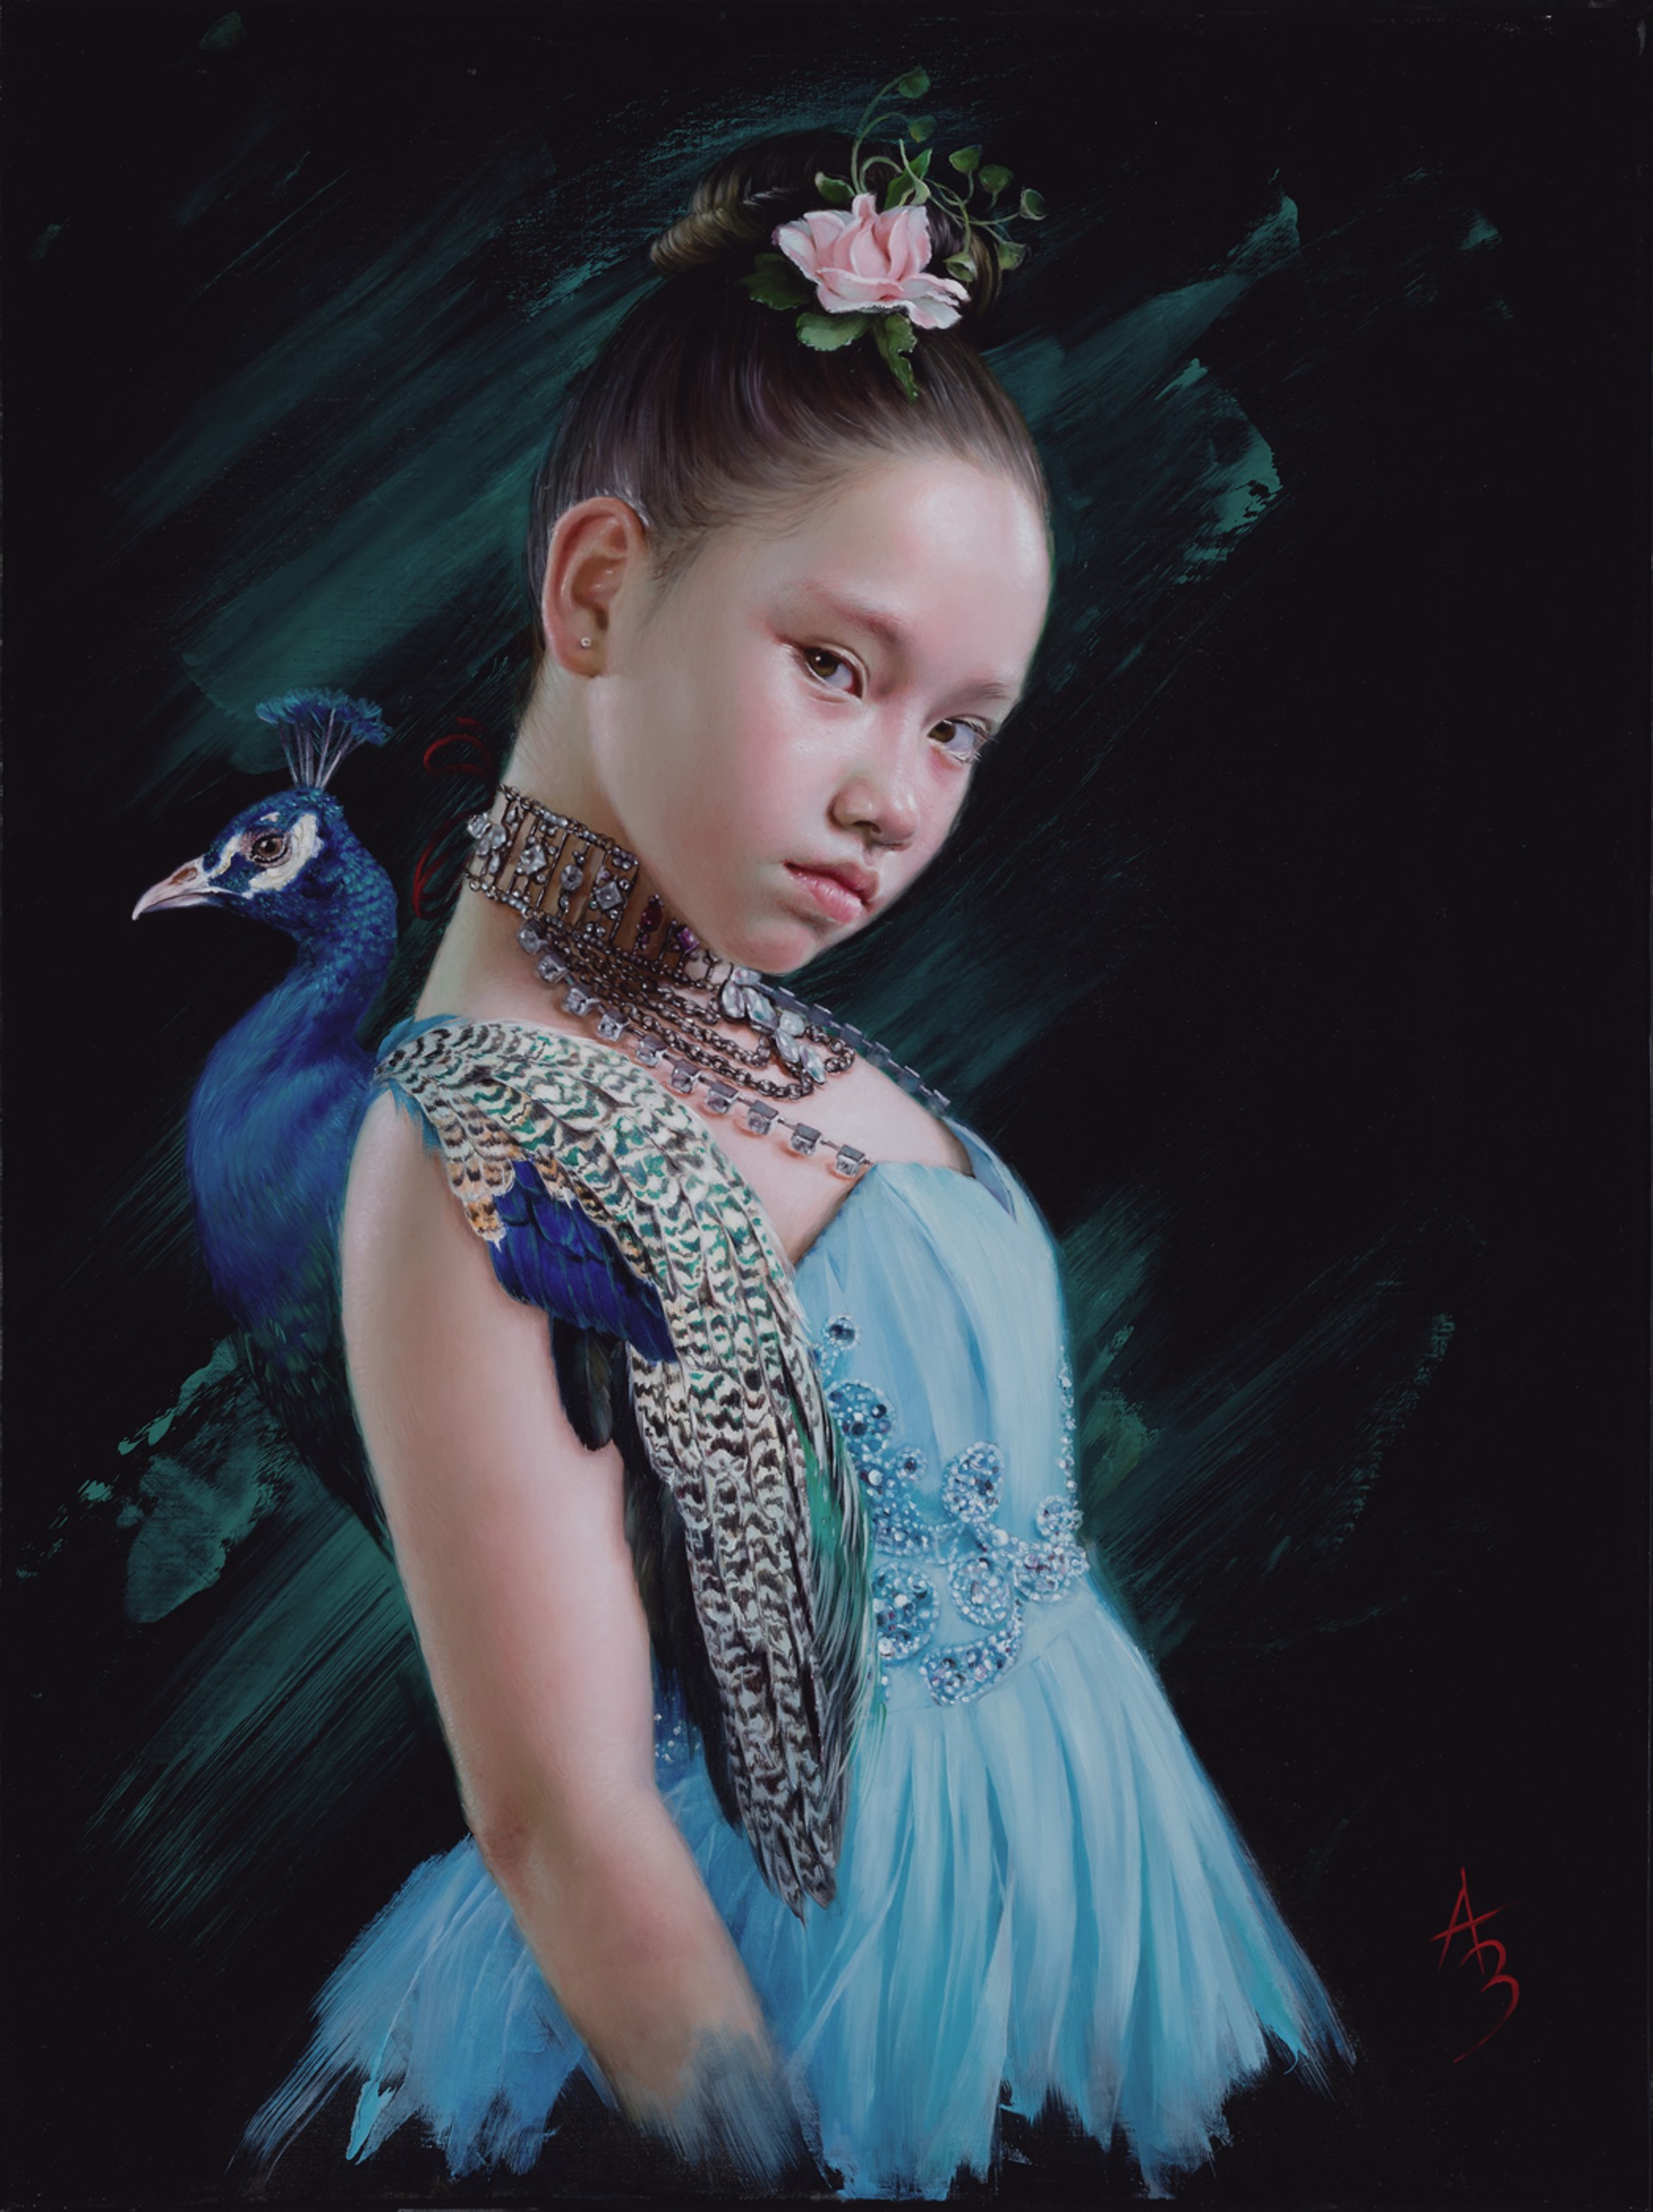 Mayura (Peacock in Sanskrit), 2021 by Alexandra Manukyan